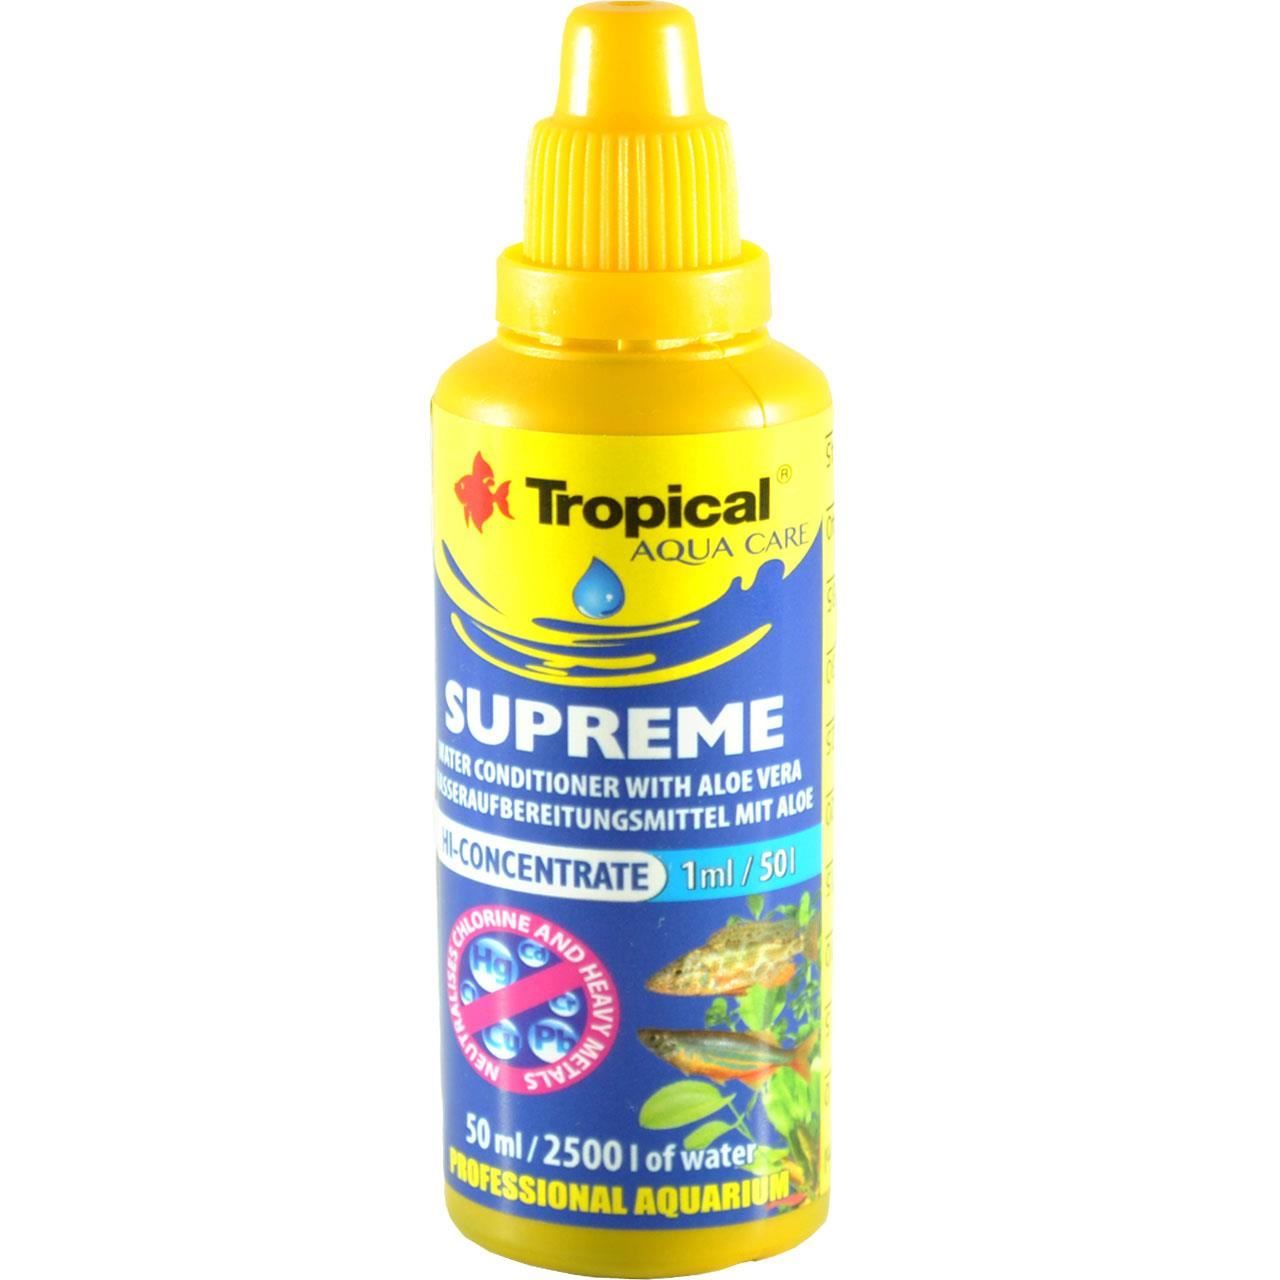 Tropical Supreme, 50 ml